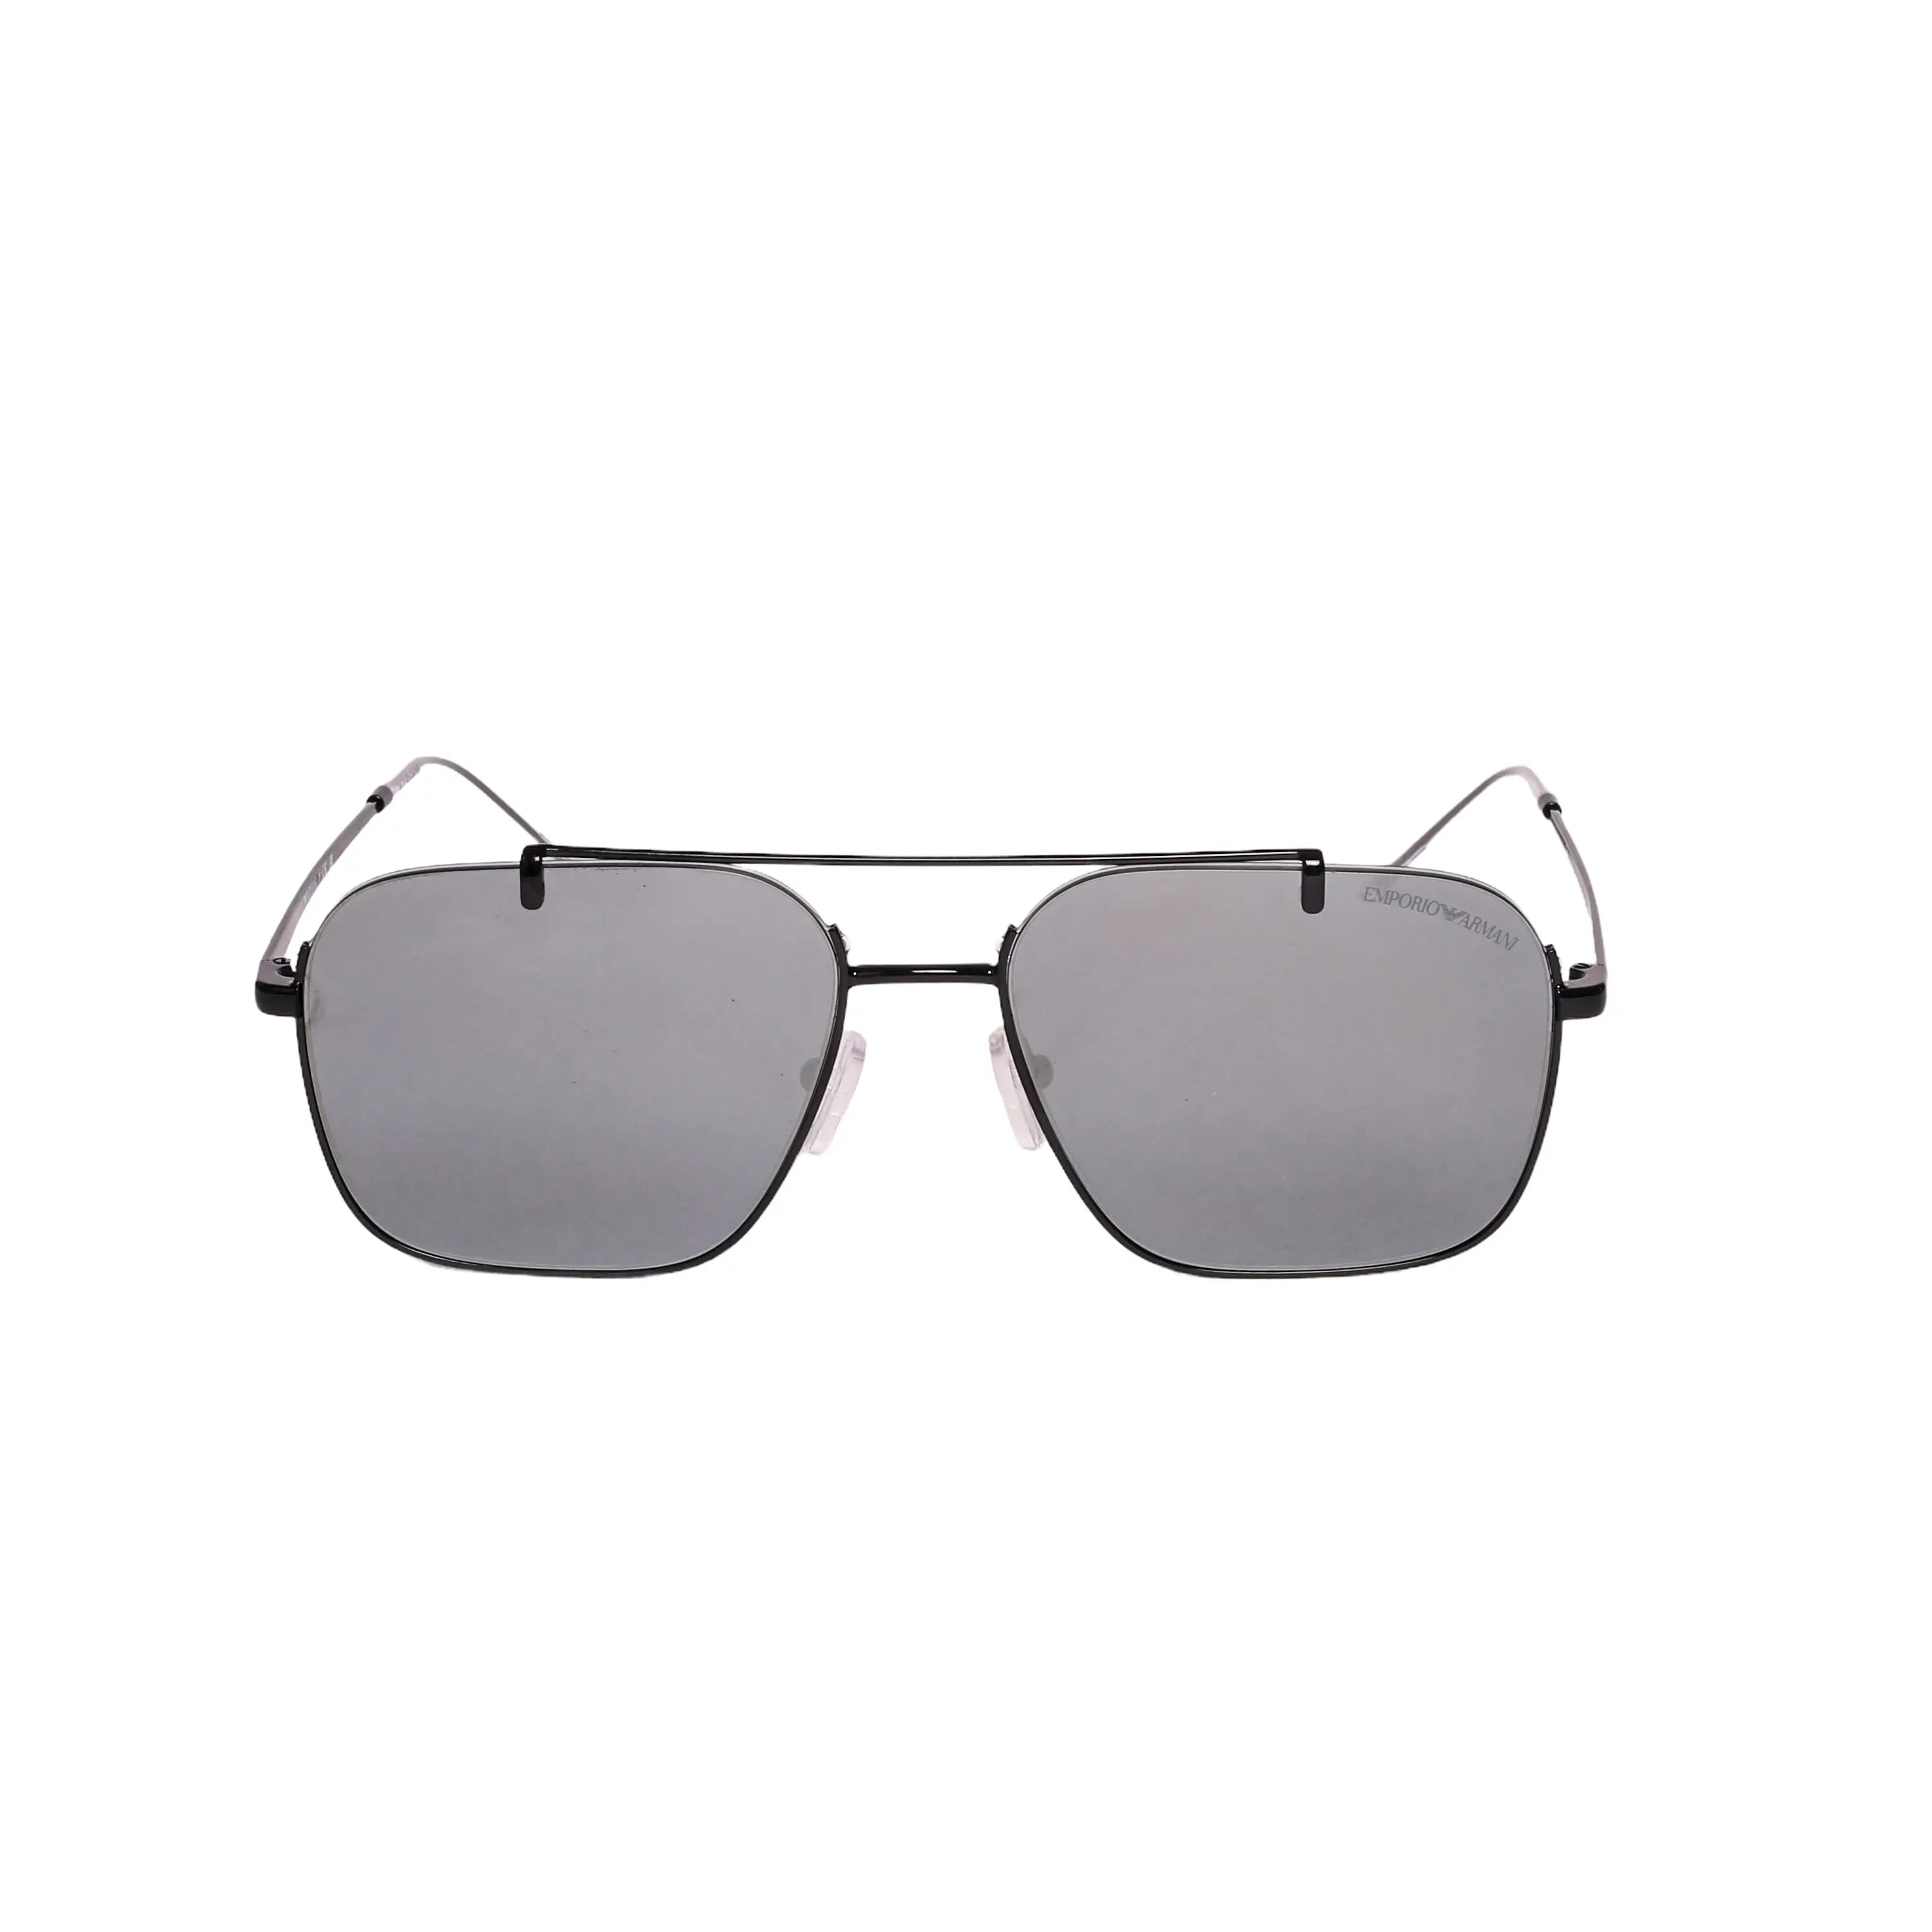 Emporio Armani-EA2150-57-30146 Sunglasses - Premium Sunglasses from Emporio Armani - Just Rs. 15490! Shop now at Laxmi Opticians